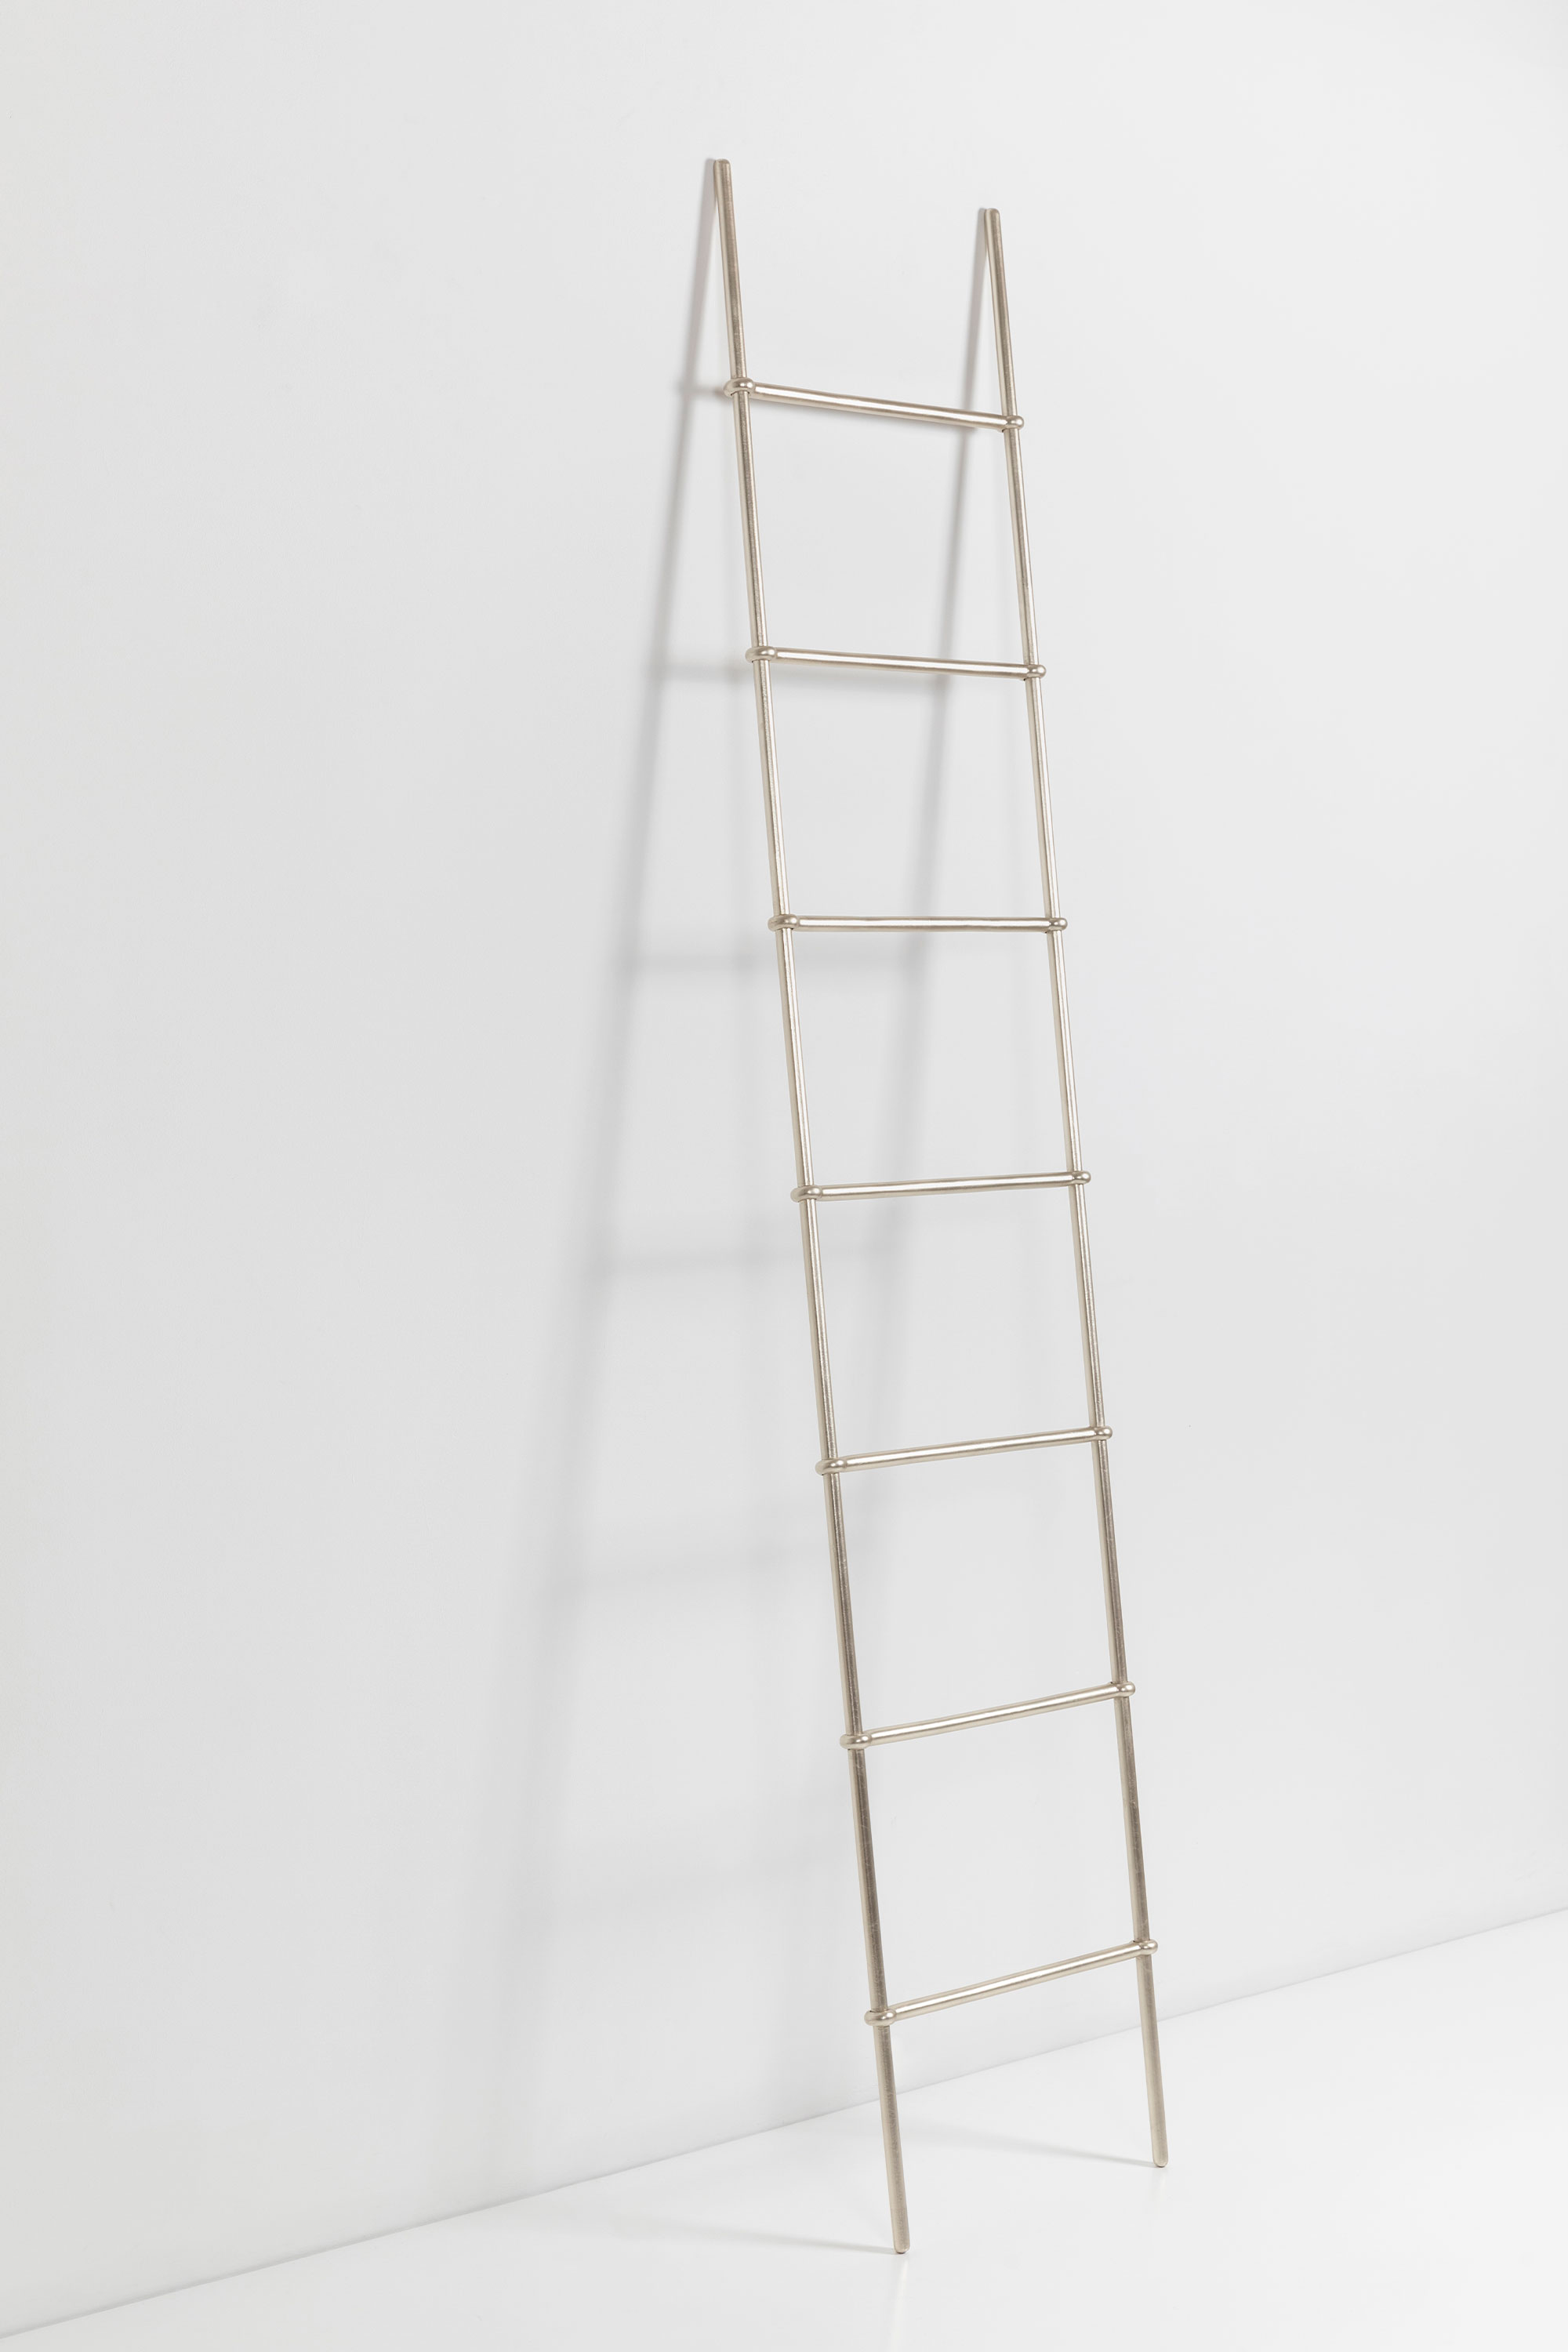 Ciel ladder - Ronan & Erwan Bouroullec - Miscellaneous - Galerie kreo